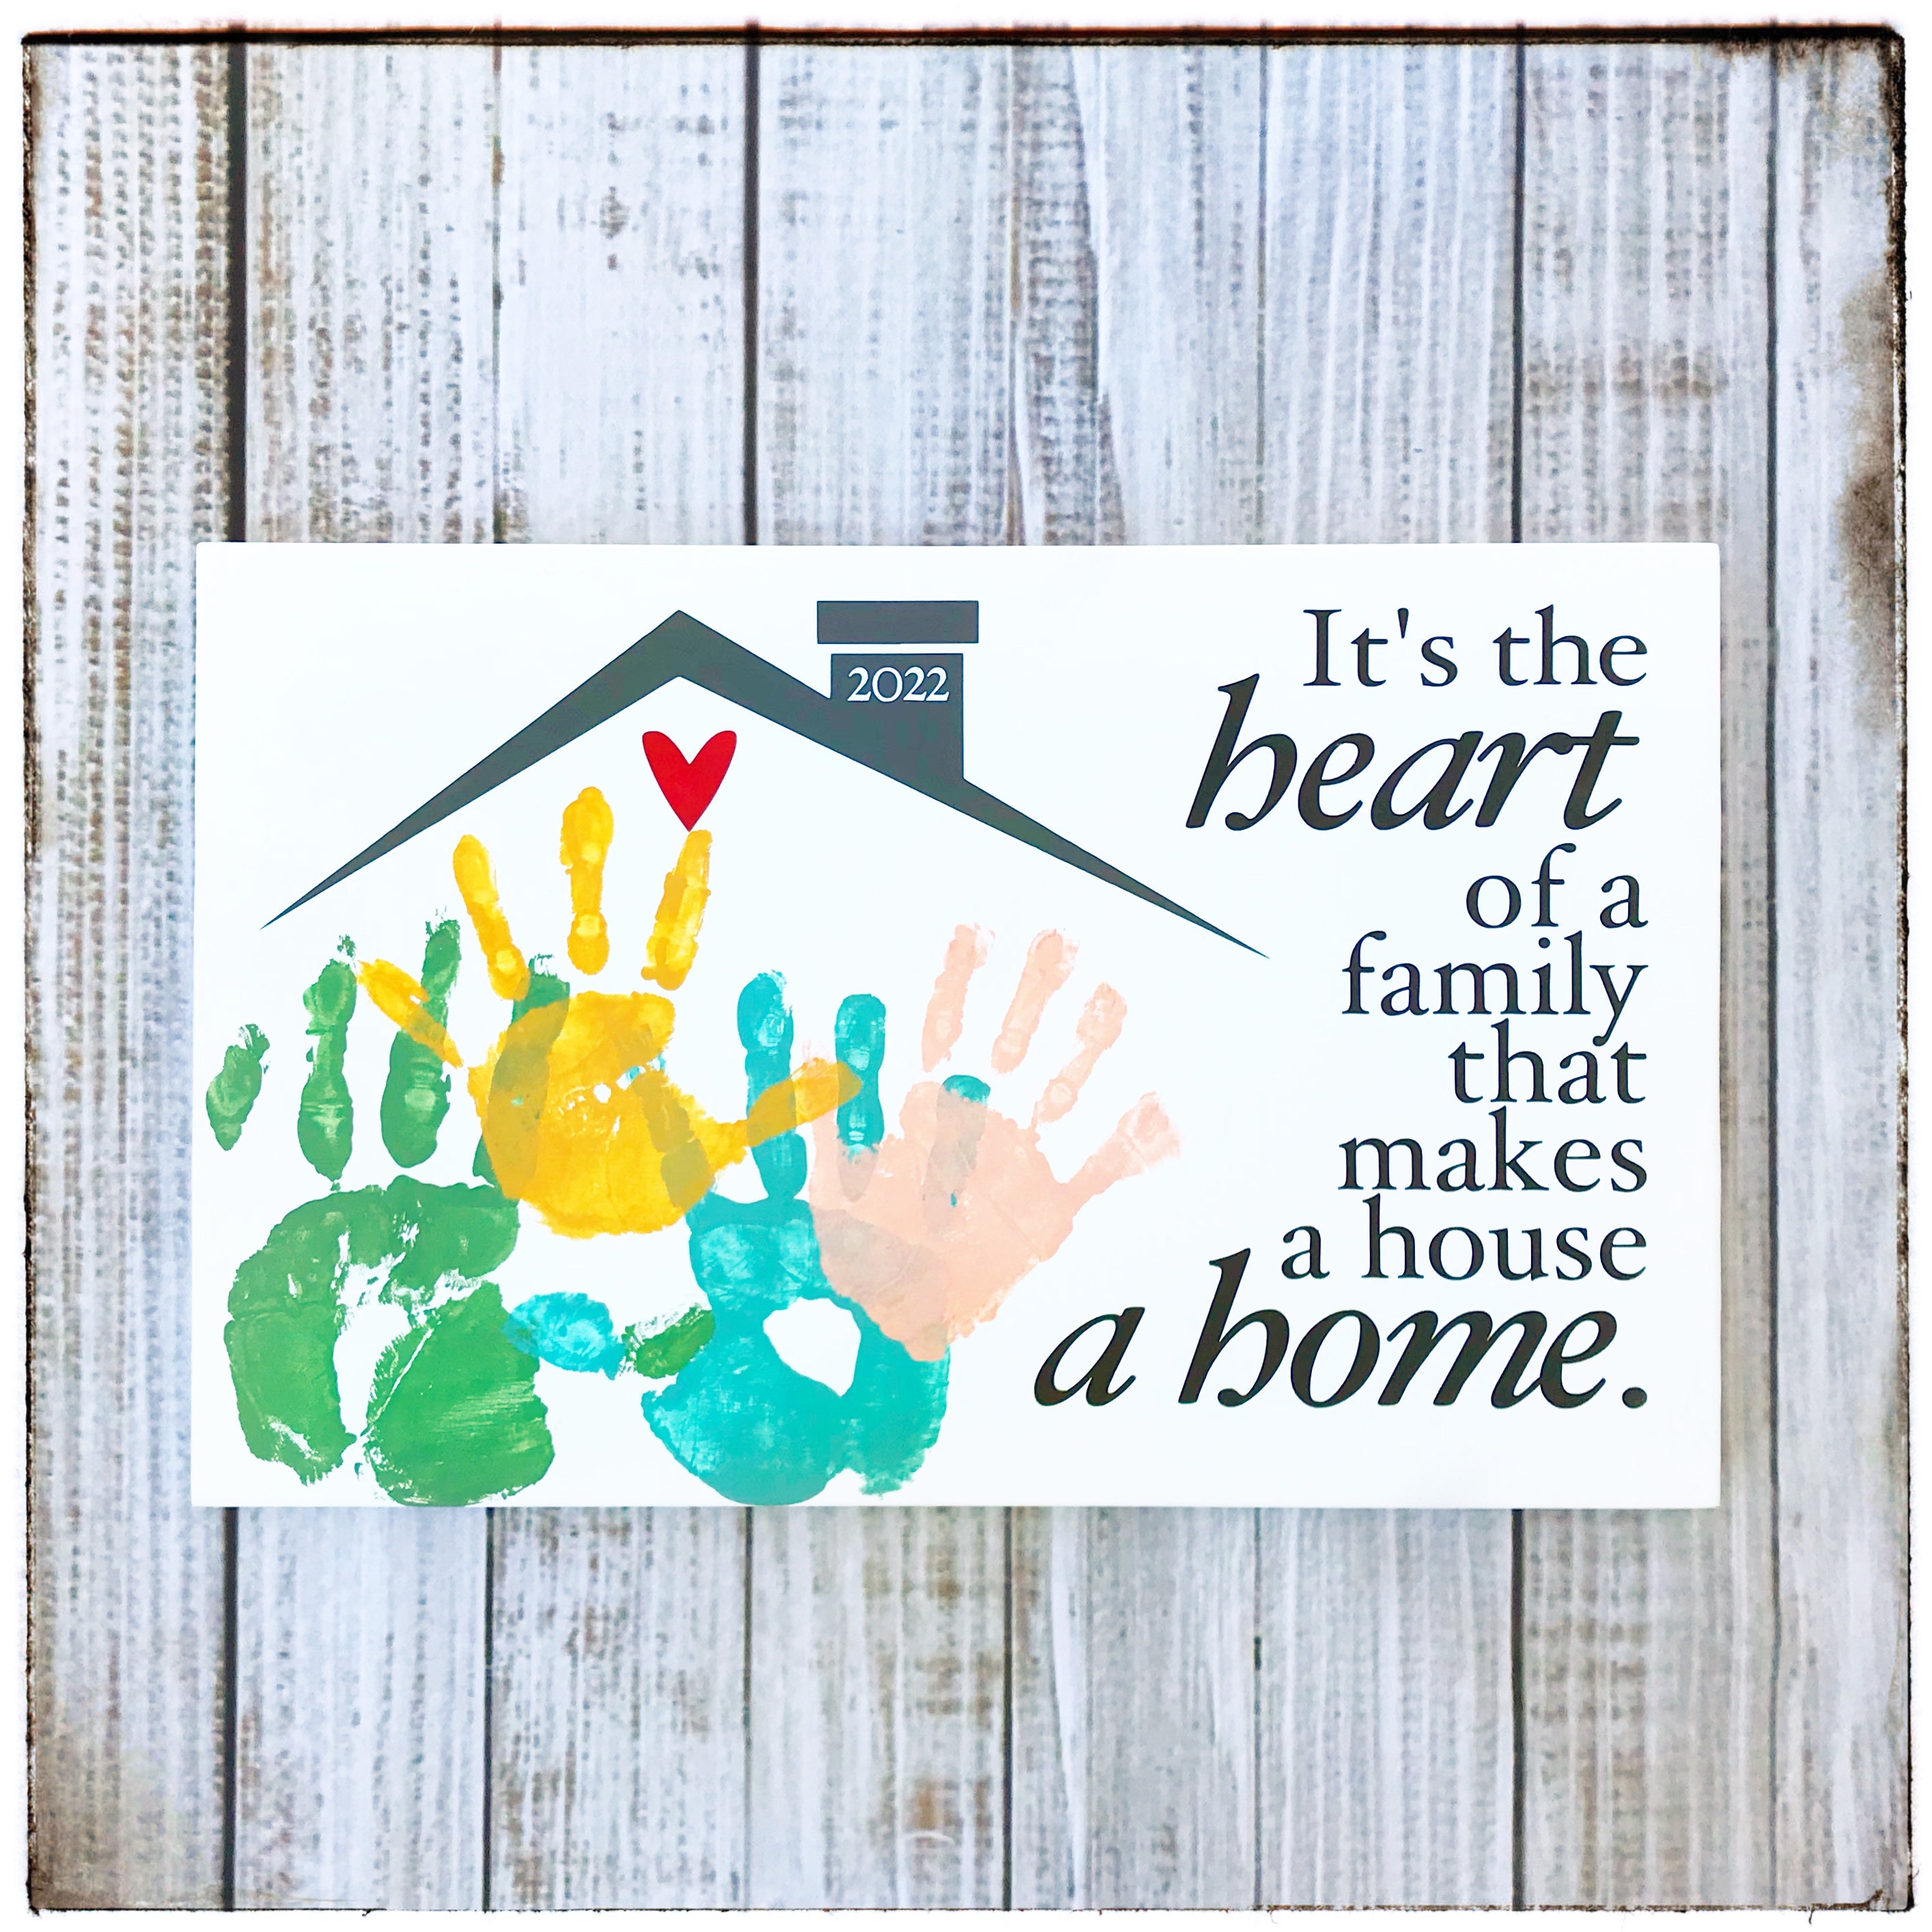 Hallmark in Our Home We Do Love Wood Sign Family Handprint Kit